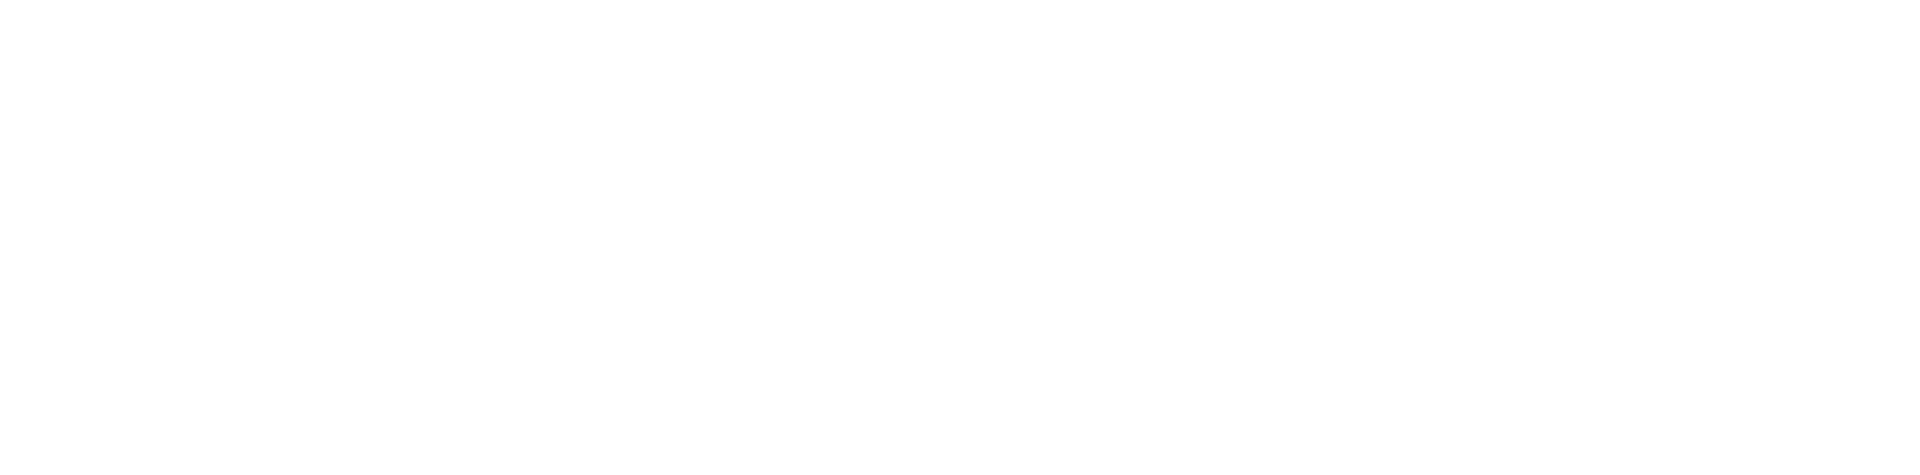 world-of-darkness-logotype